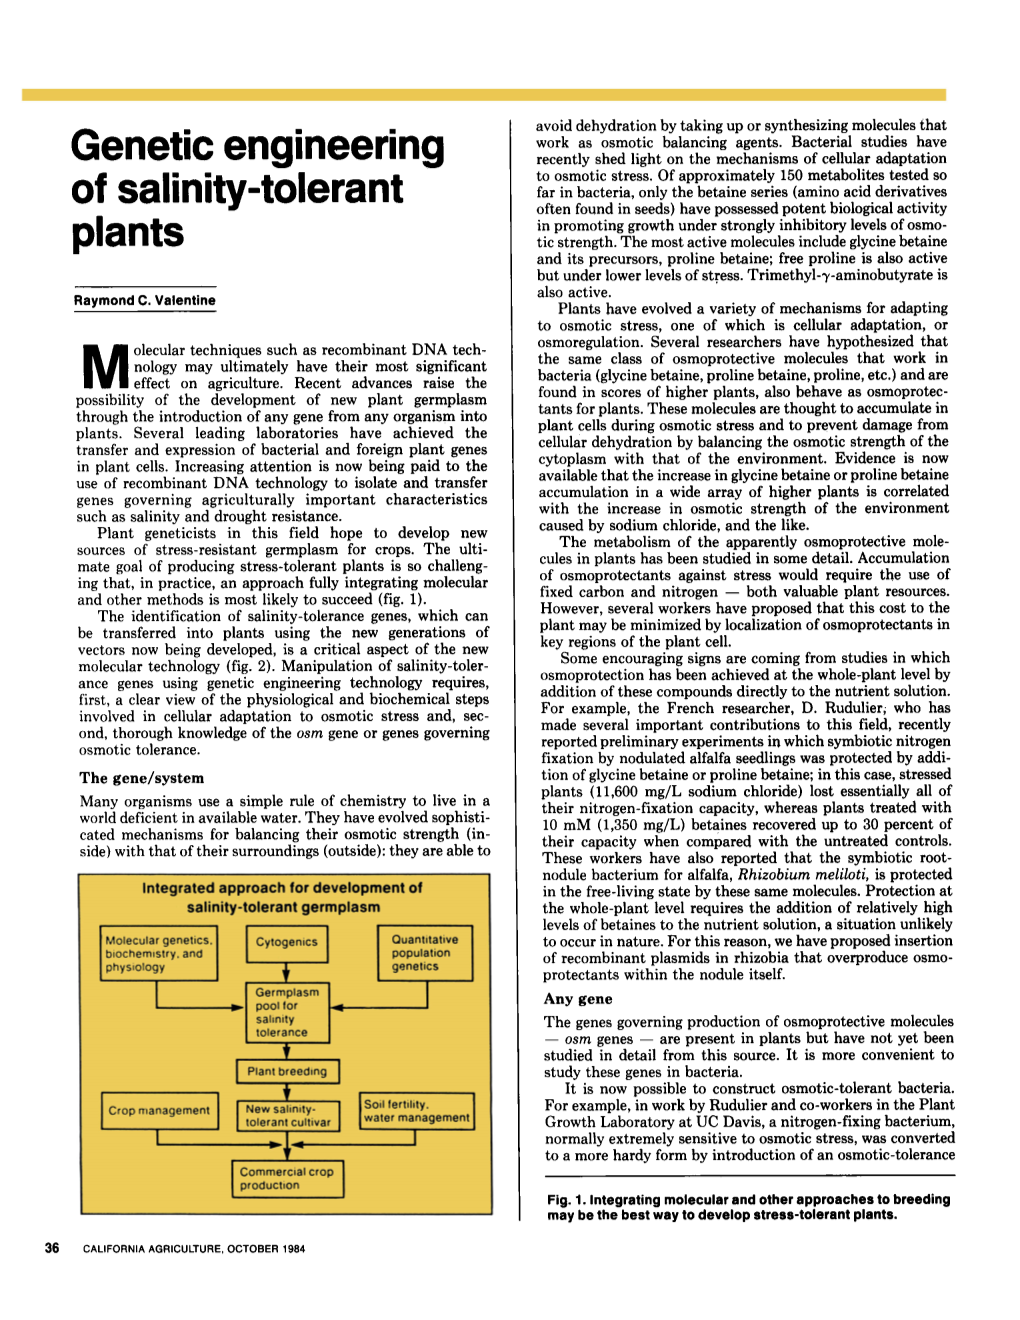 Genetic Engineering of Salinity-Tolerant Plants